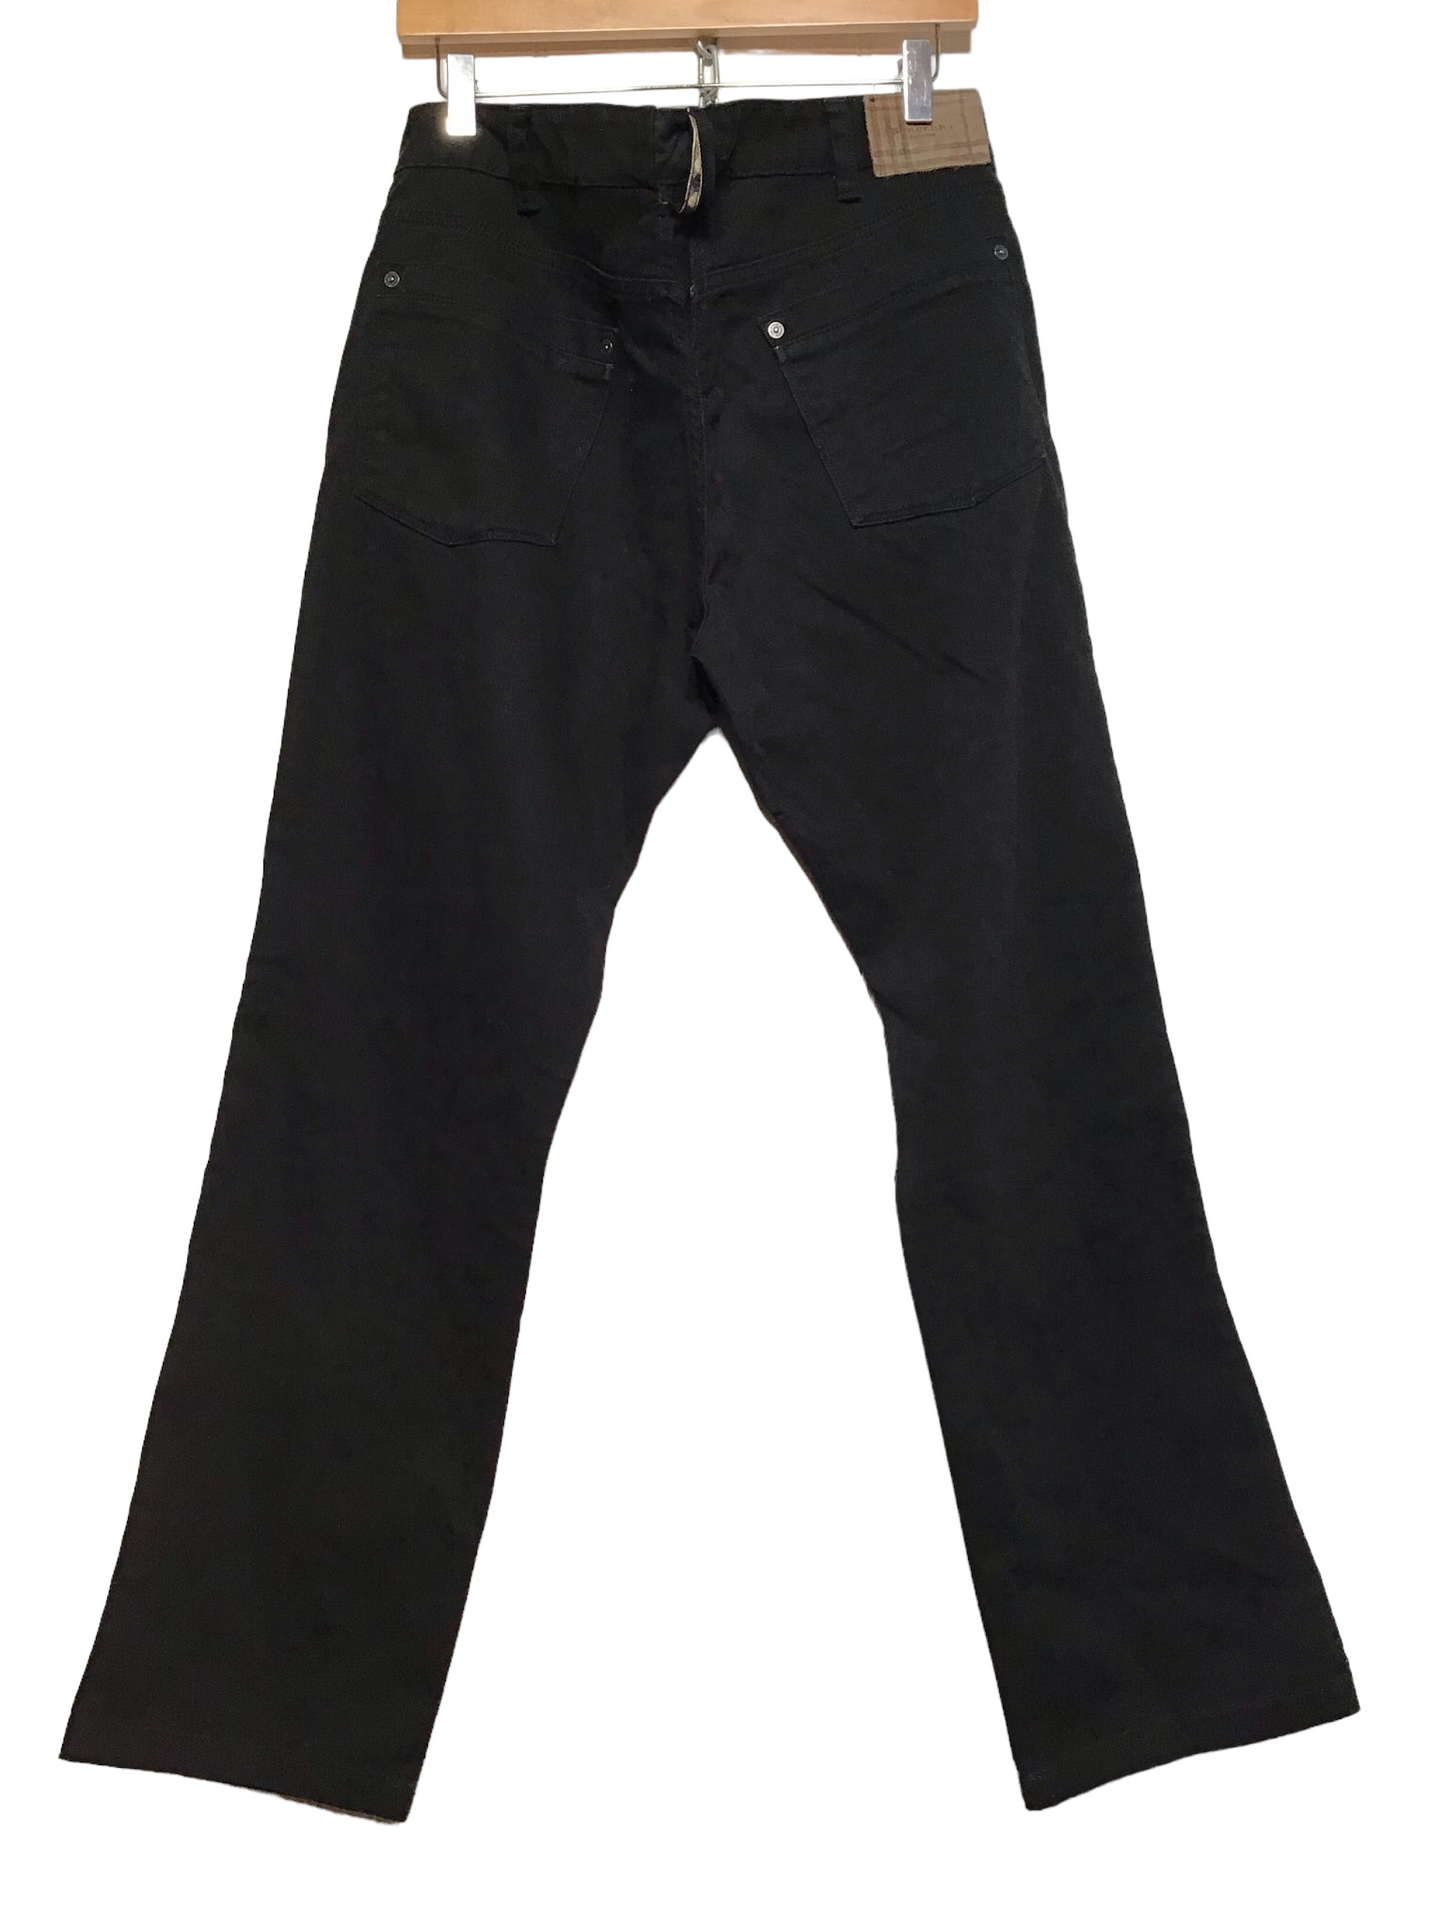 Burberry Black Straight Leg Jeans (34”X 30”)